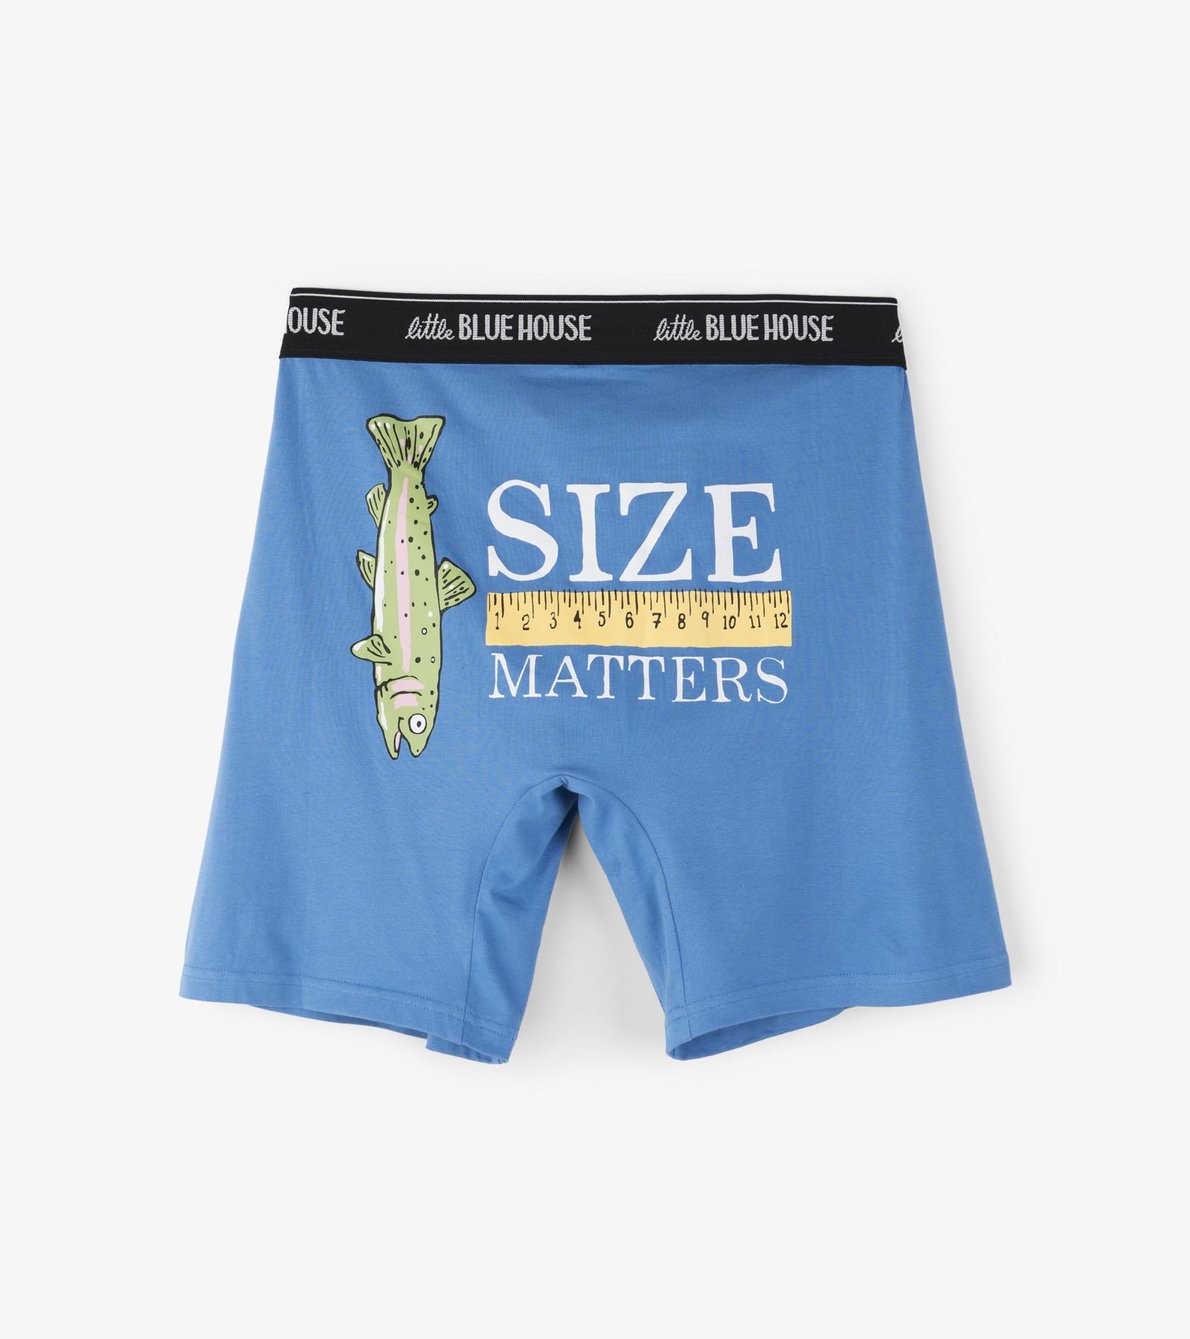 View larger image of Size Matters Men's Boxer Briefs